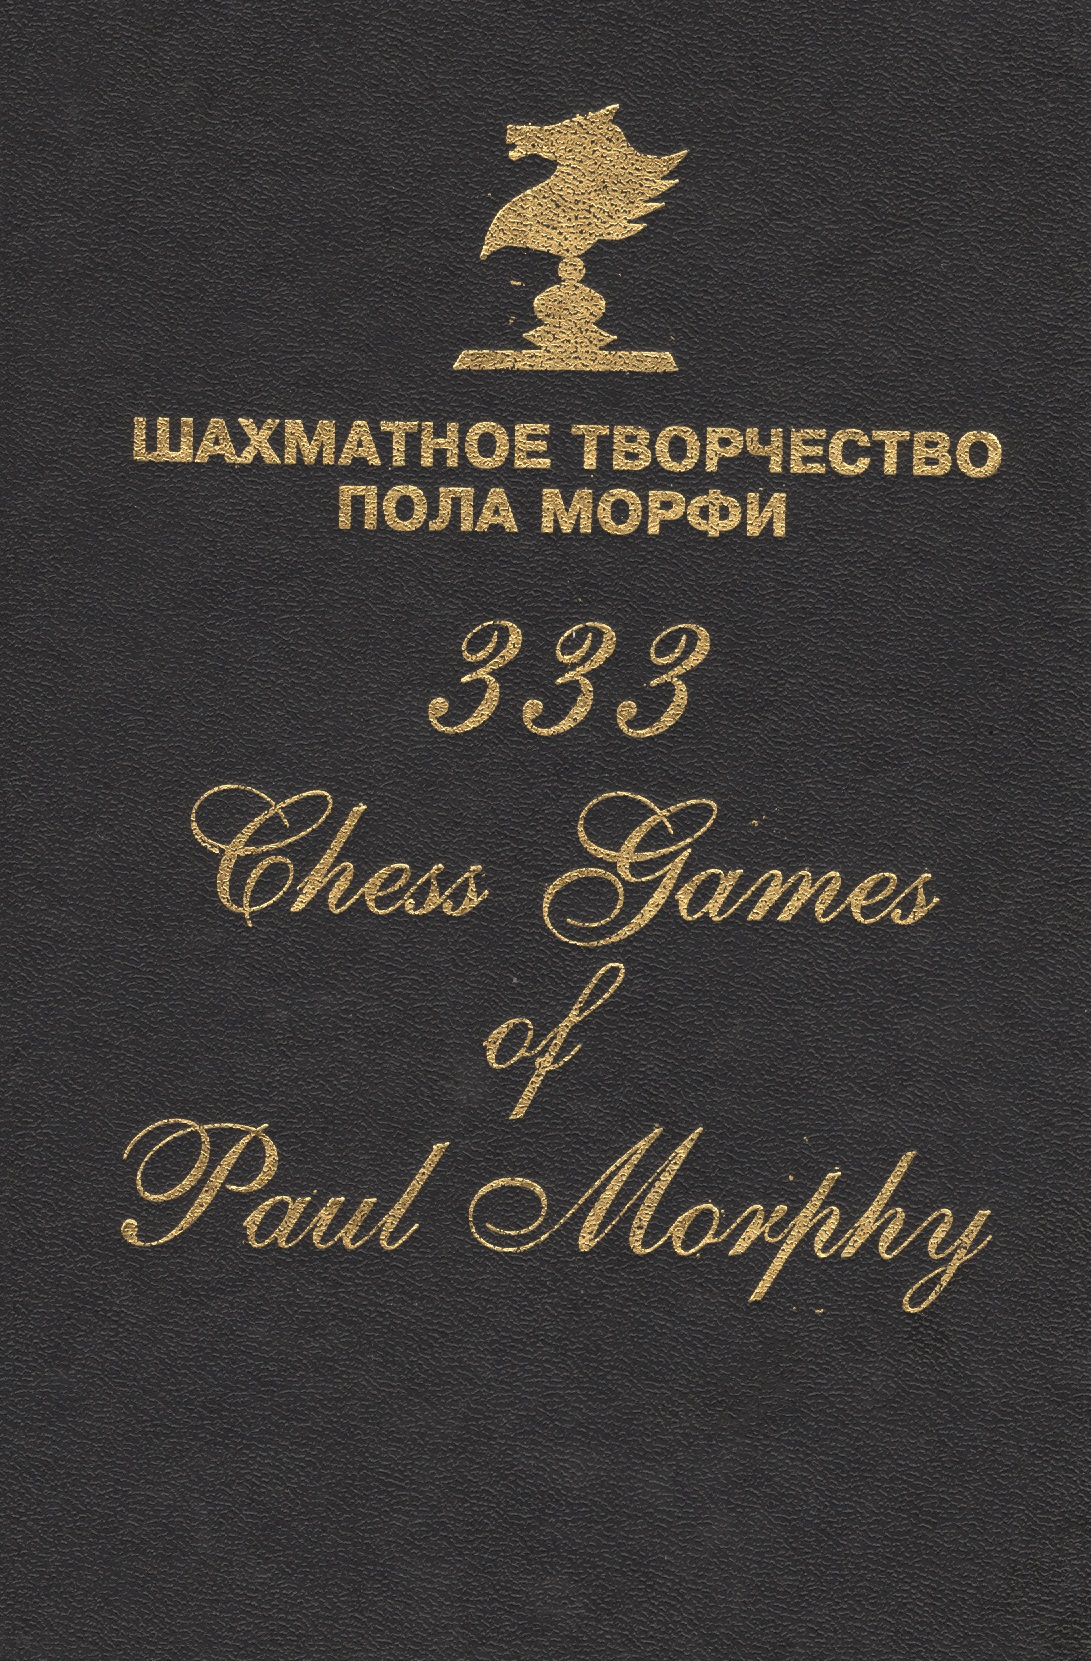 None Шахматное творчество Пола Морфи 333 Chess games of Paul Morphy (Сафиуллин)